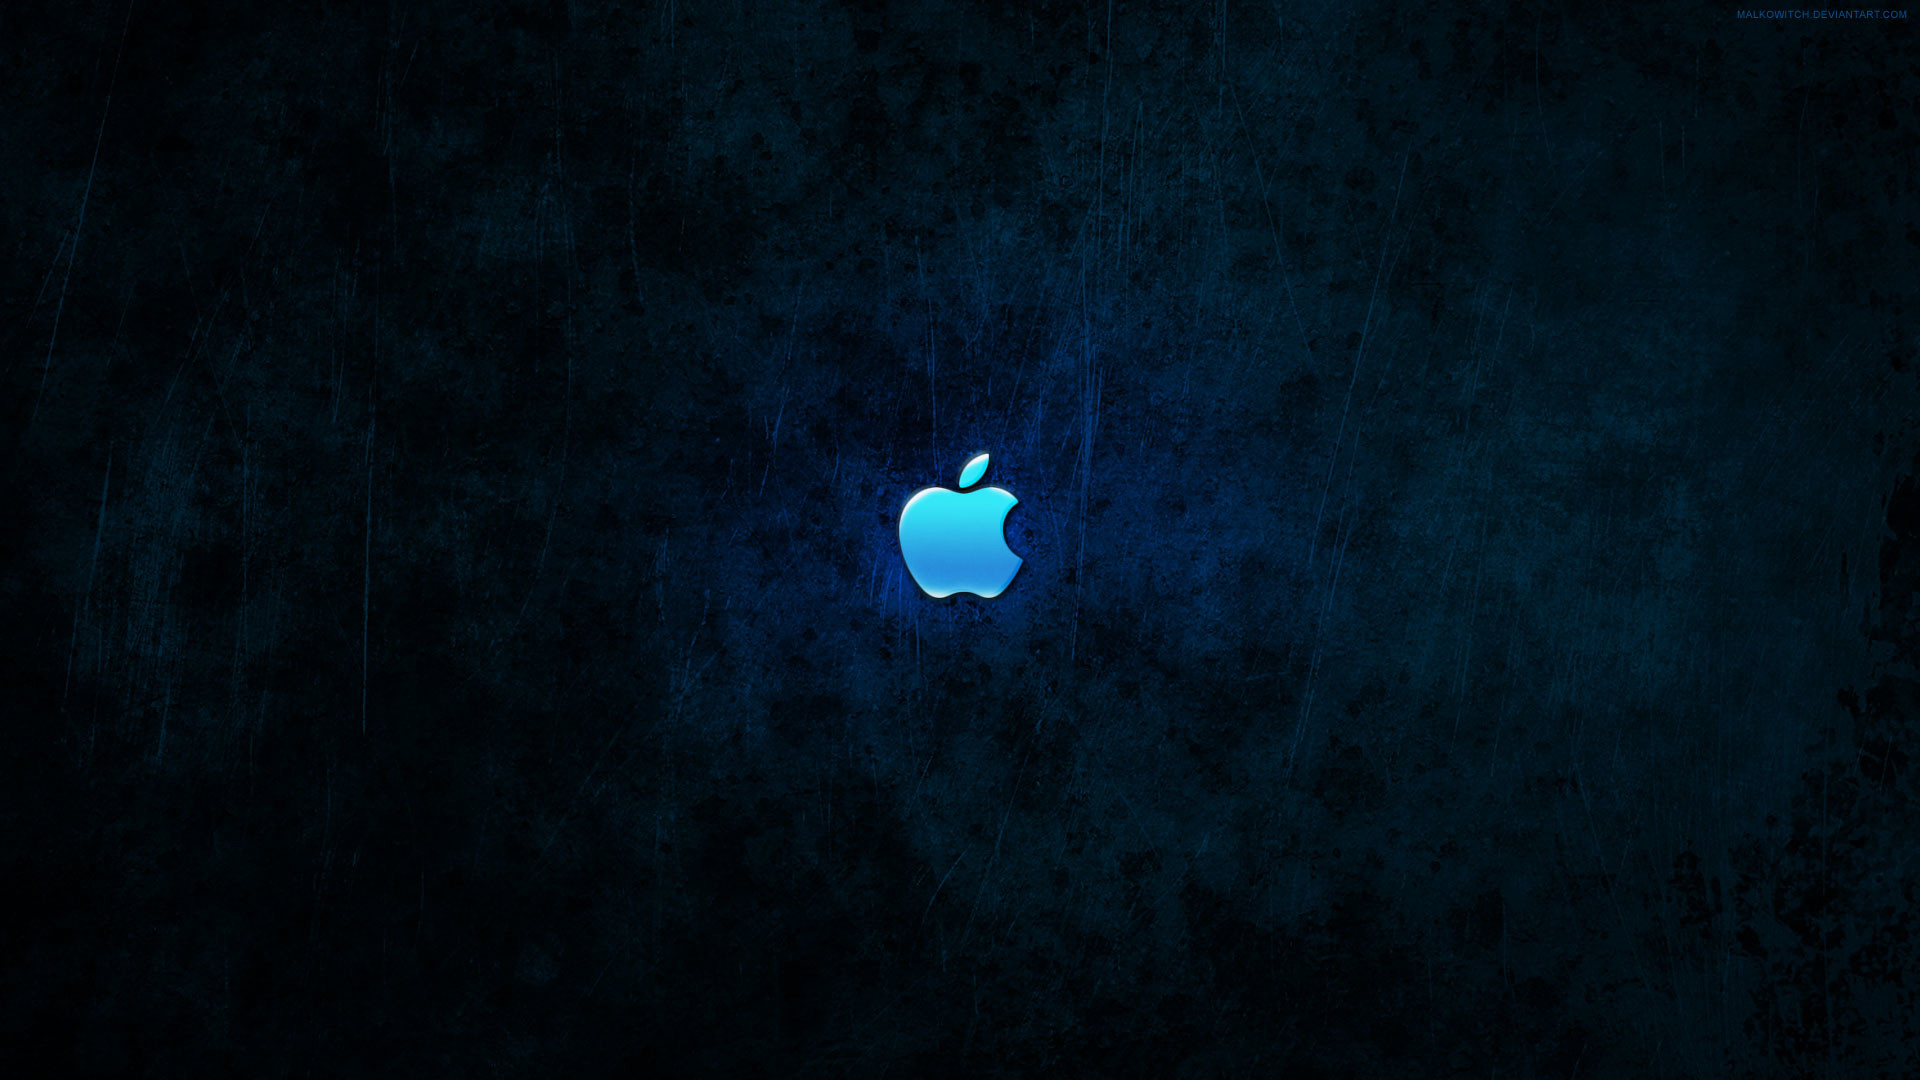 1920x1080 hd pics photos blue dark apple logo desktop background wallpaper